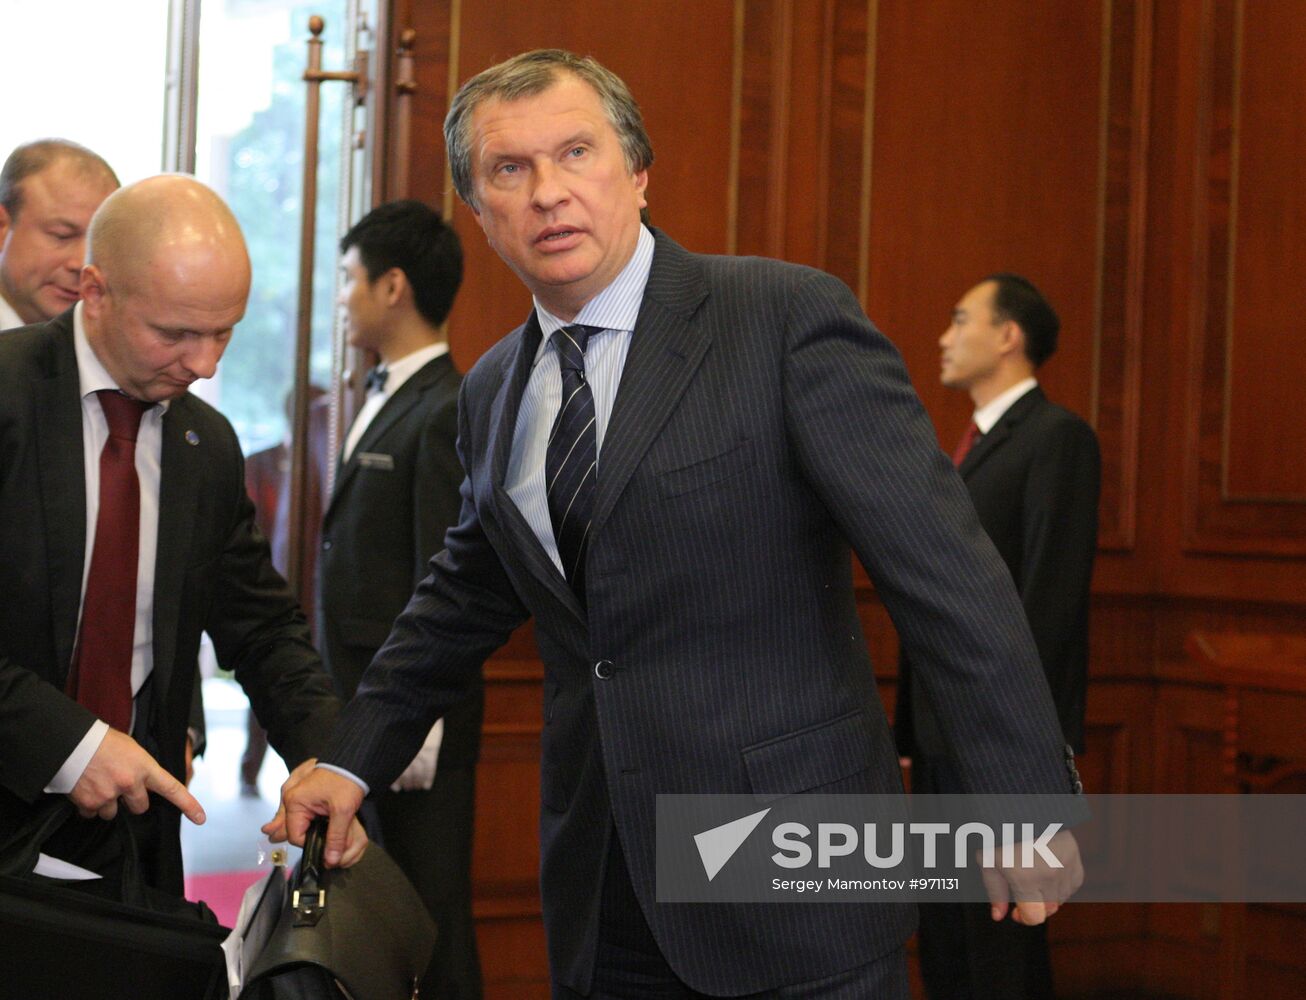 Igor Sechin and Alexander Zhukov at working visit to China